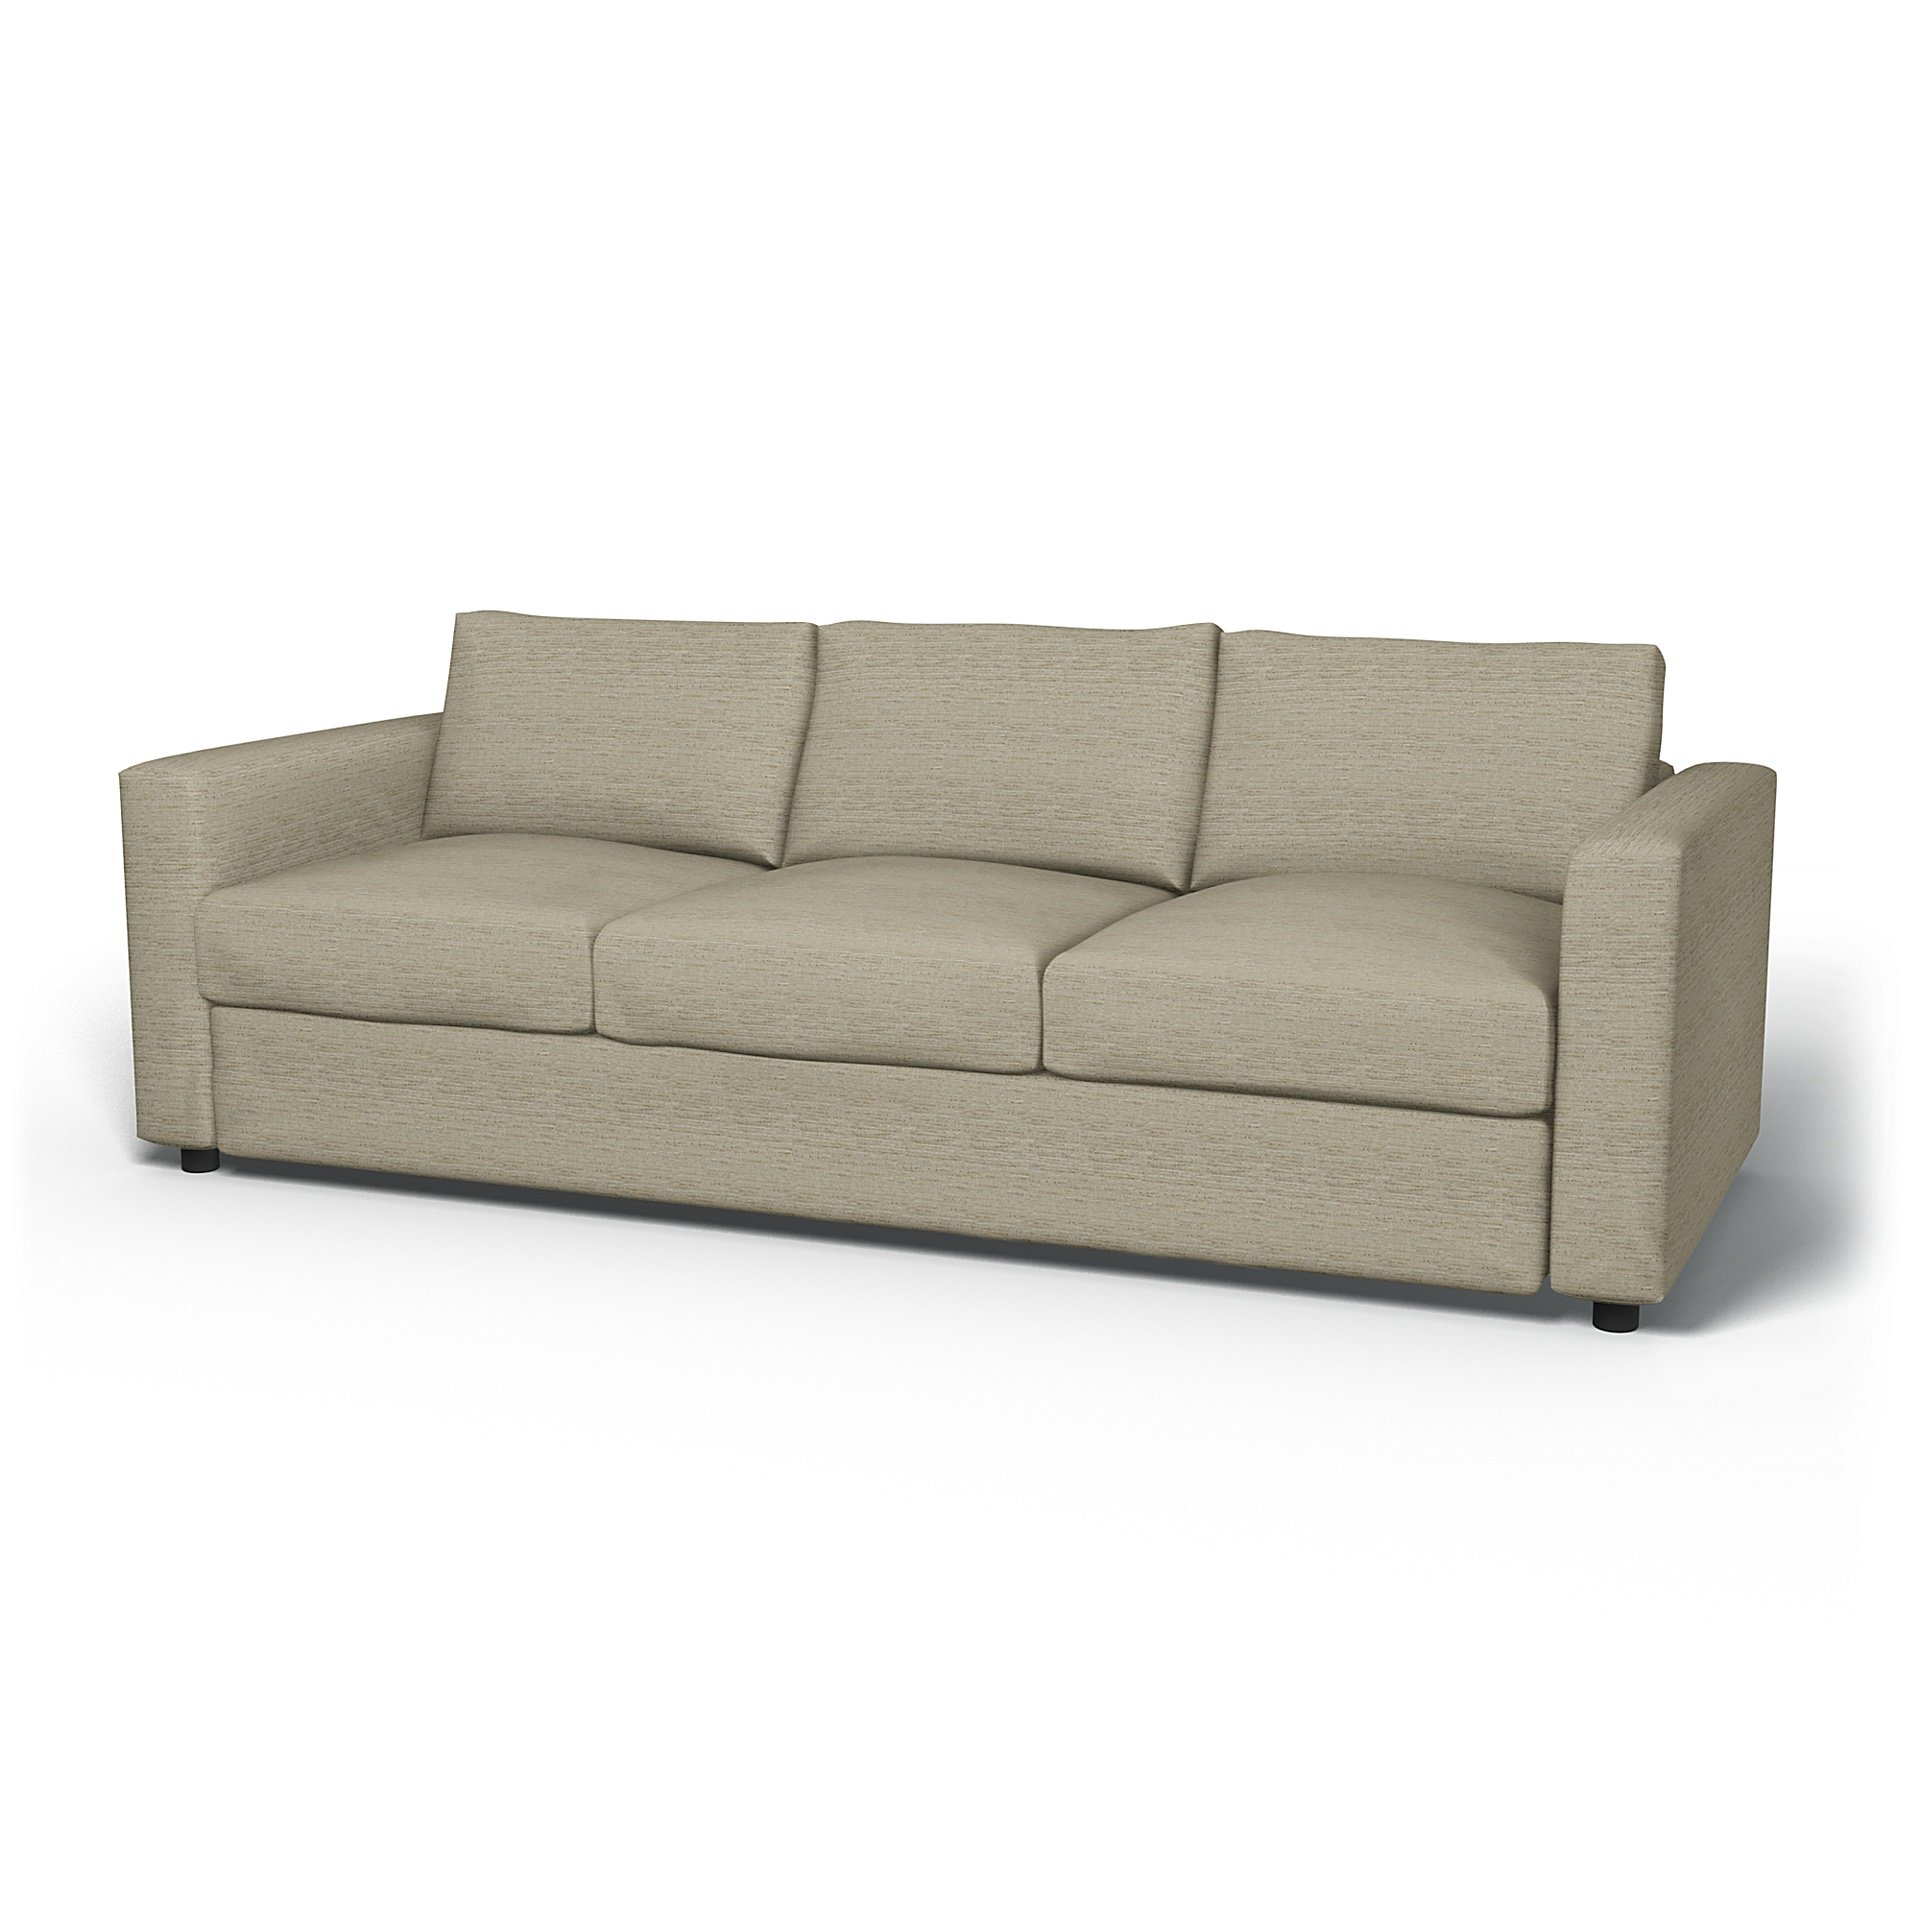 IKEA - Vimle 3 Seater Sofa Cover, Light Sand, Boucle & Texture - Bemz